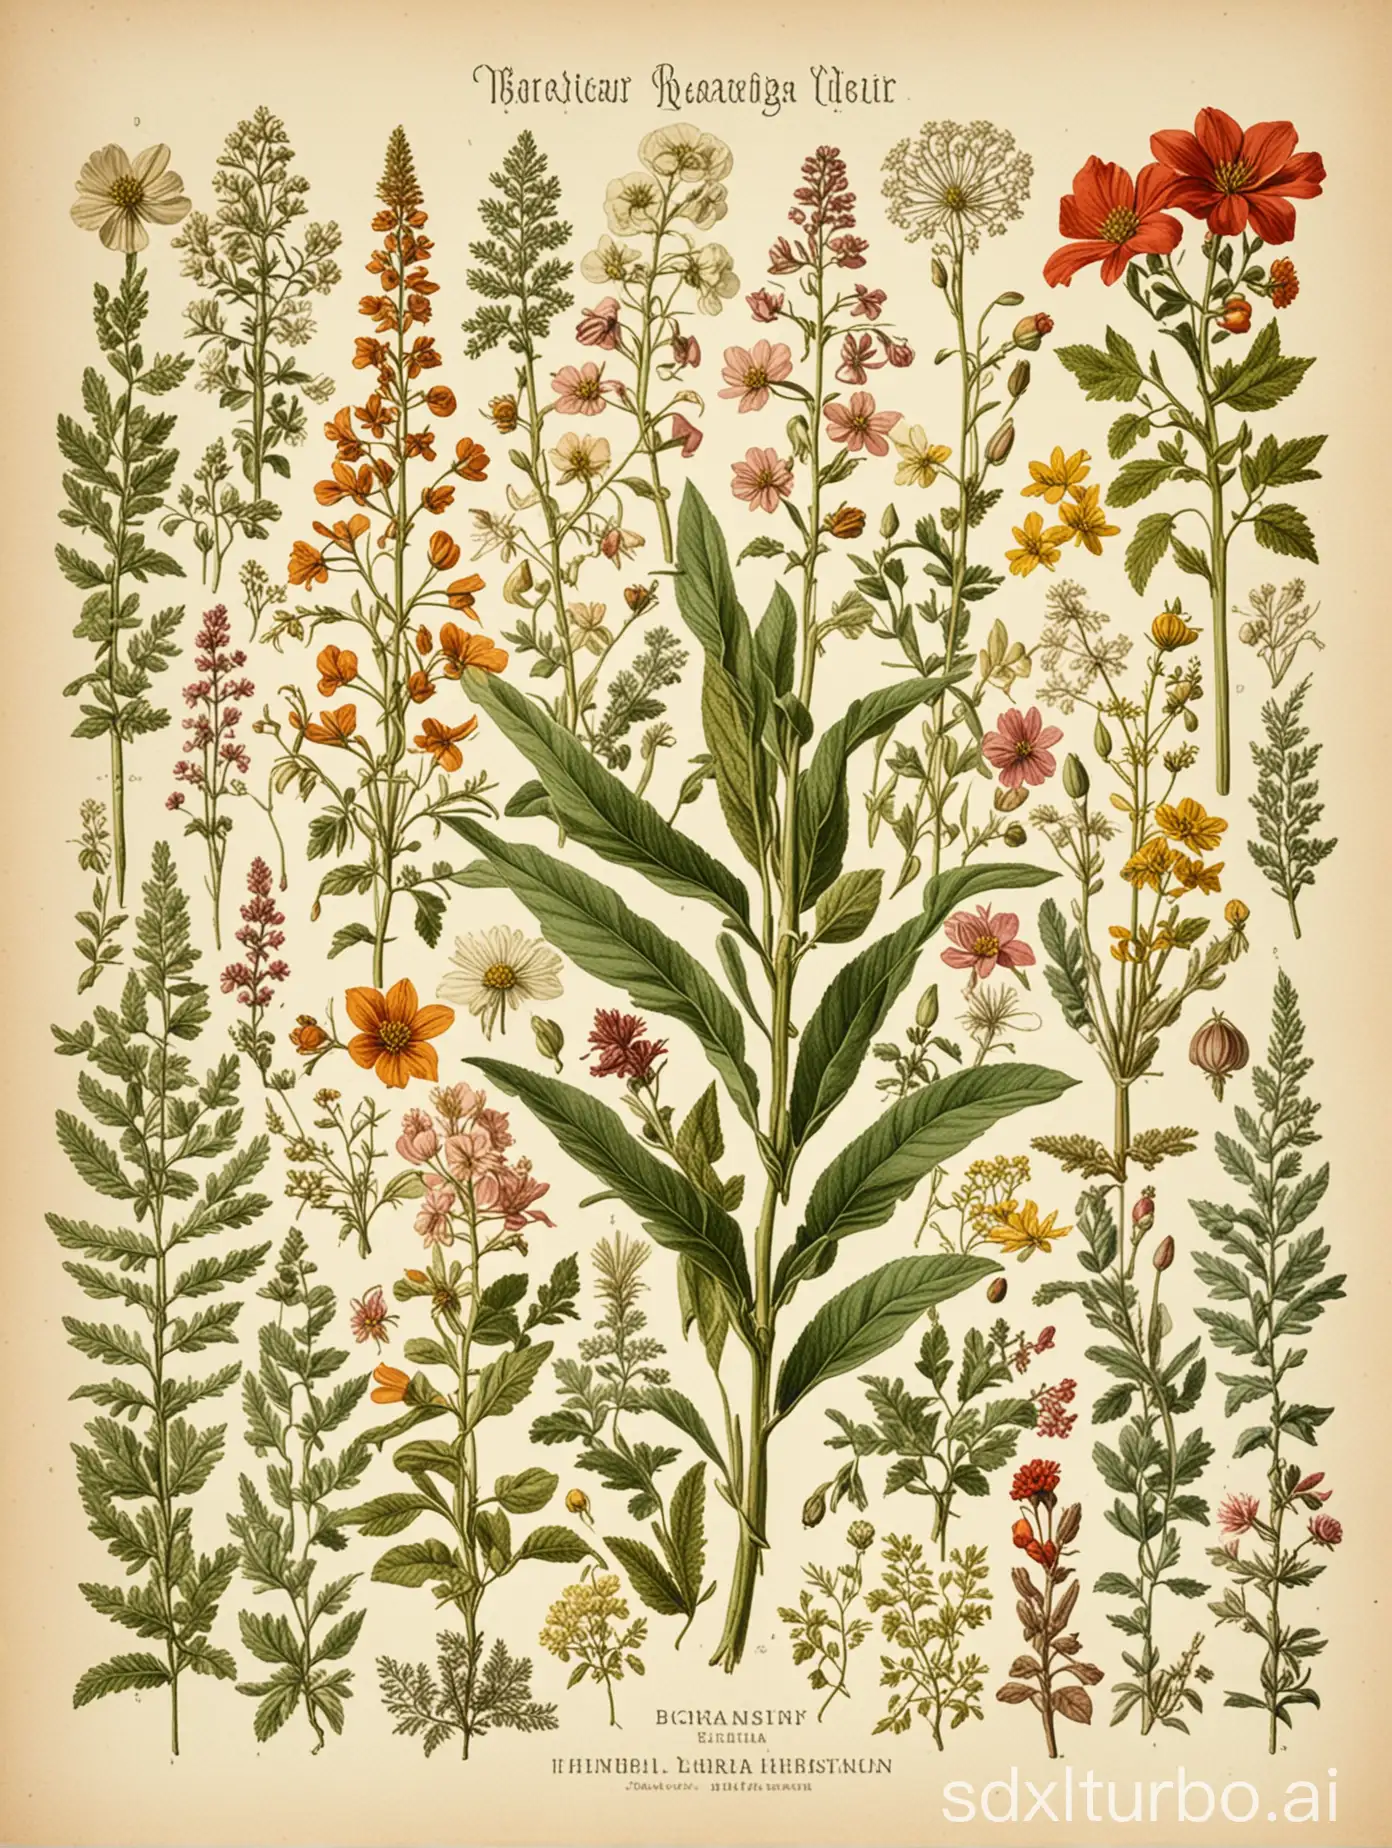 Botanical herbarium poster of flowers